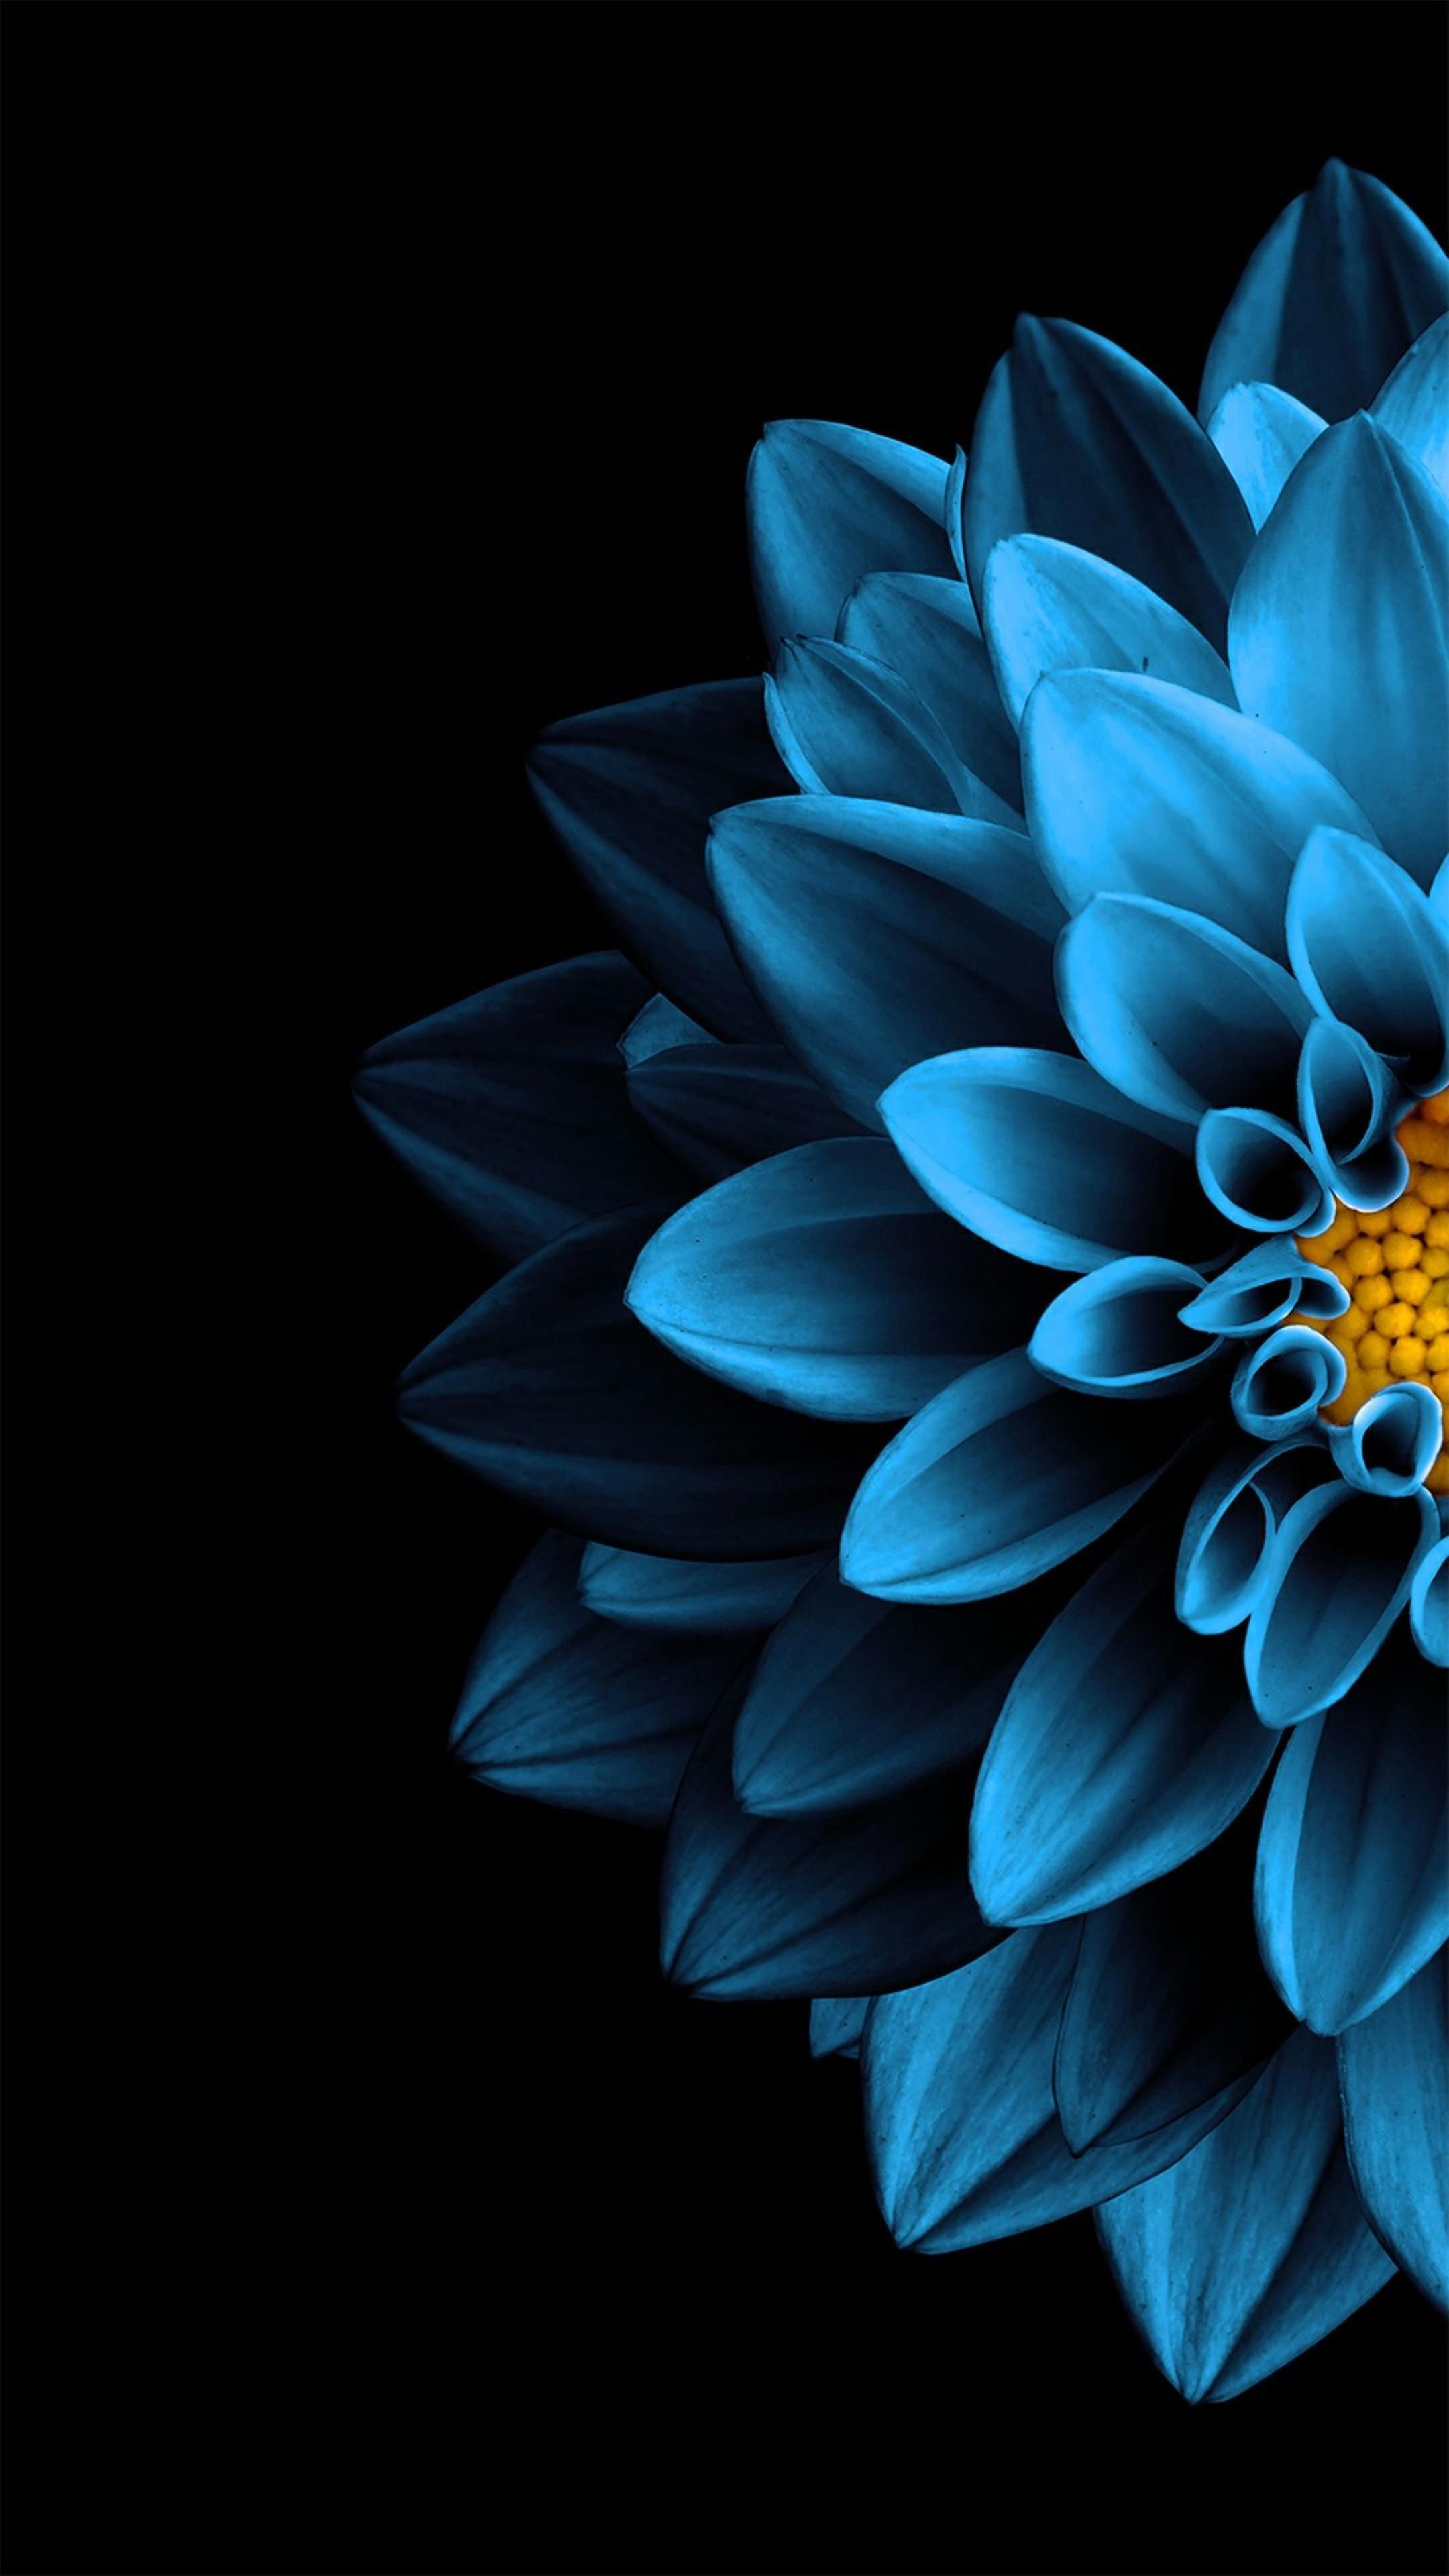 AMOLED Flower Wallpaper. Papel de parede azul para iphone